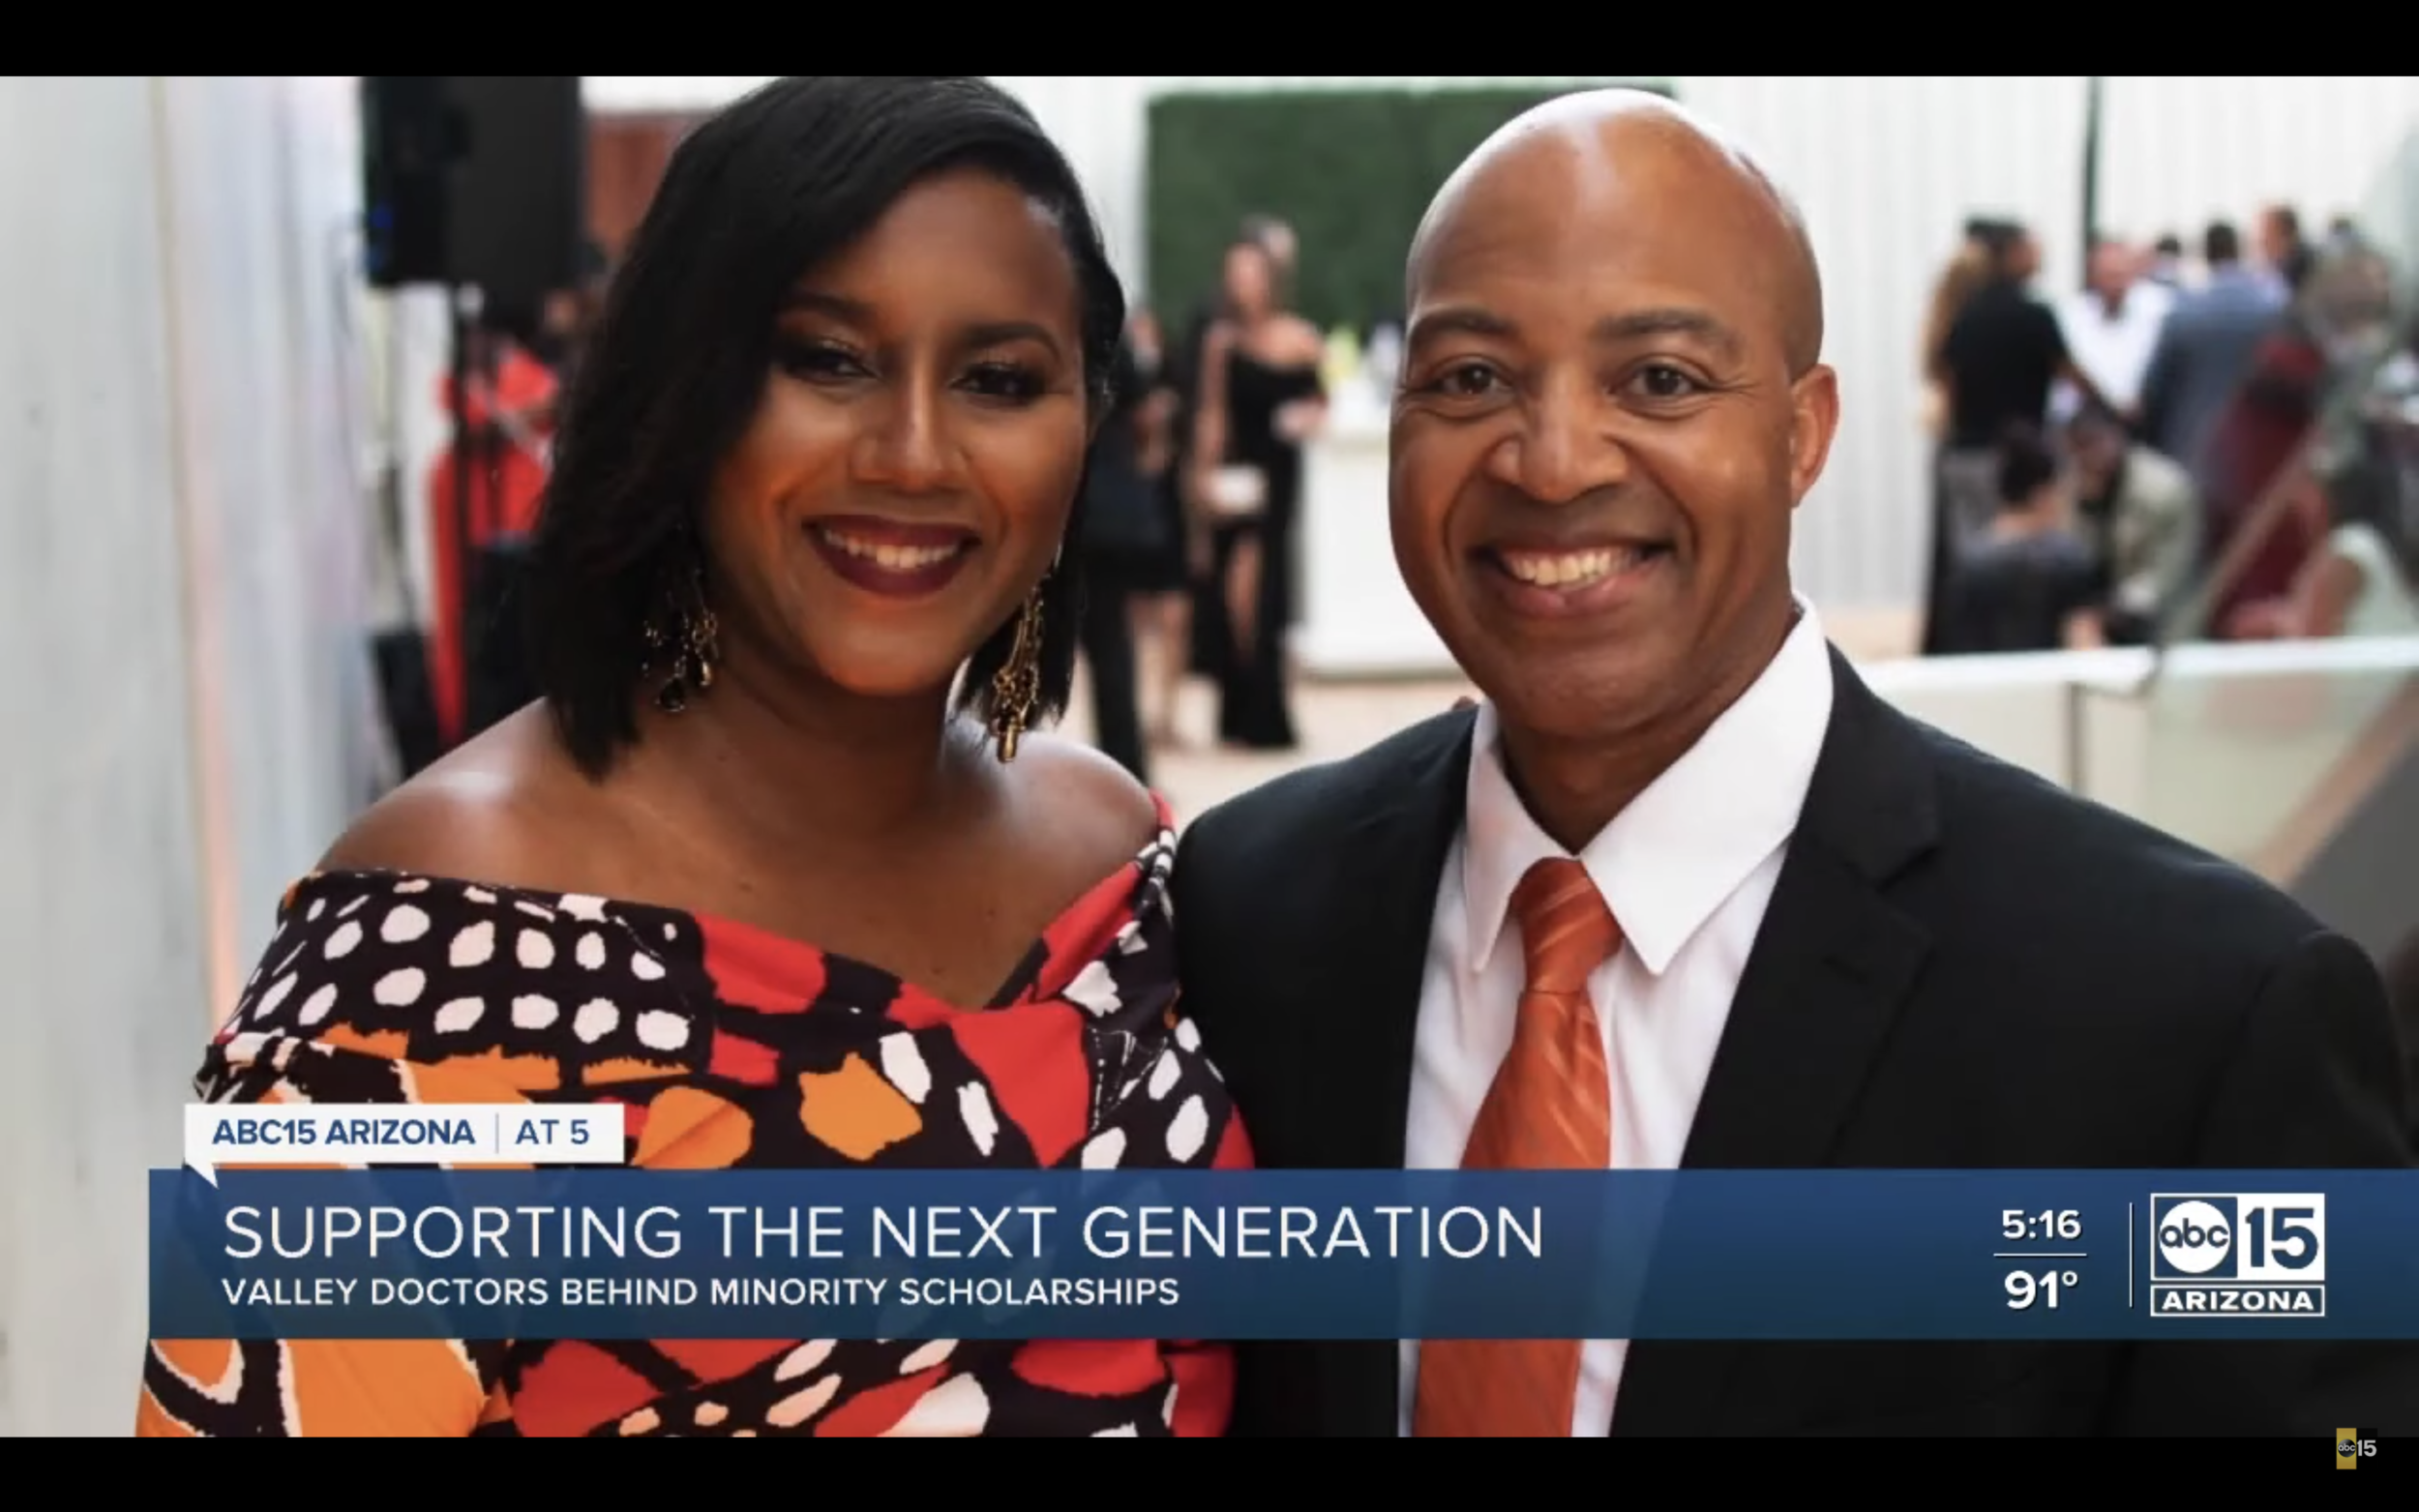 ABC15 Arizona - Supporting The Next Generation